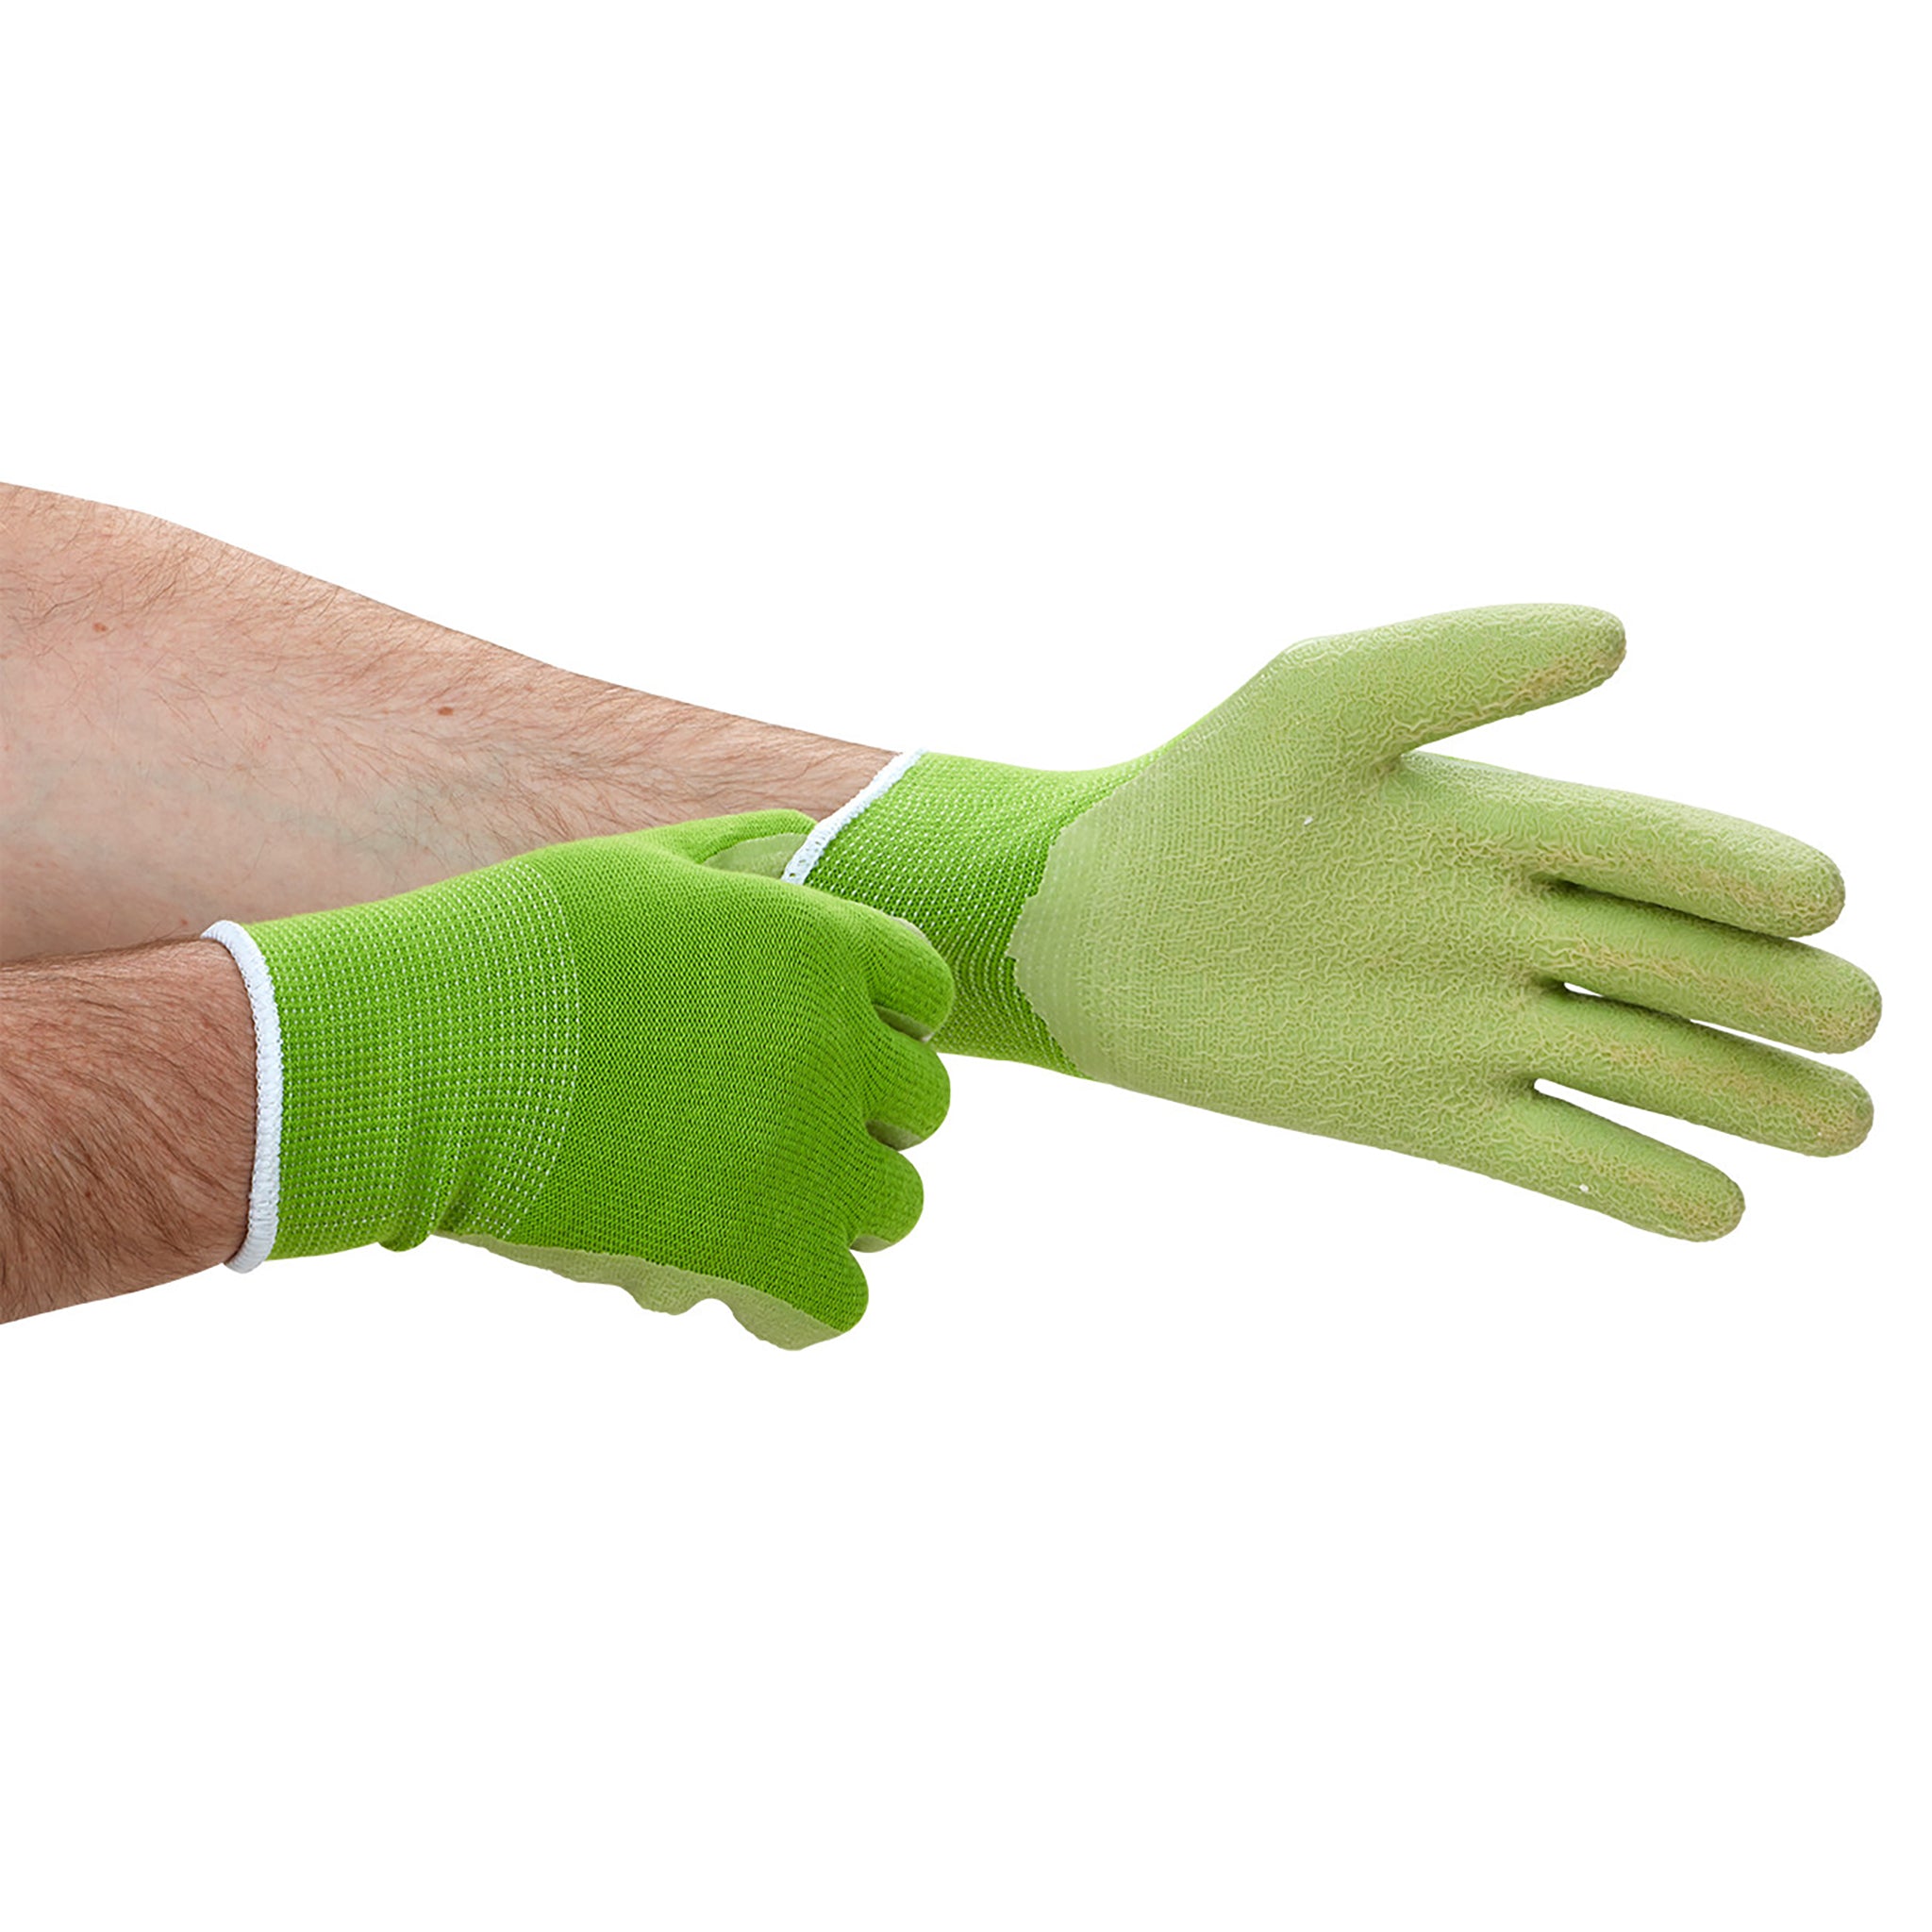 All purpose fair trade rubber gardening gloves